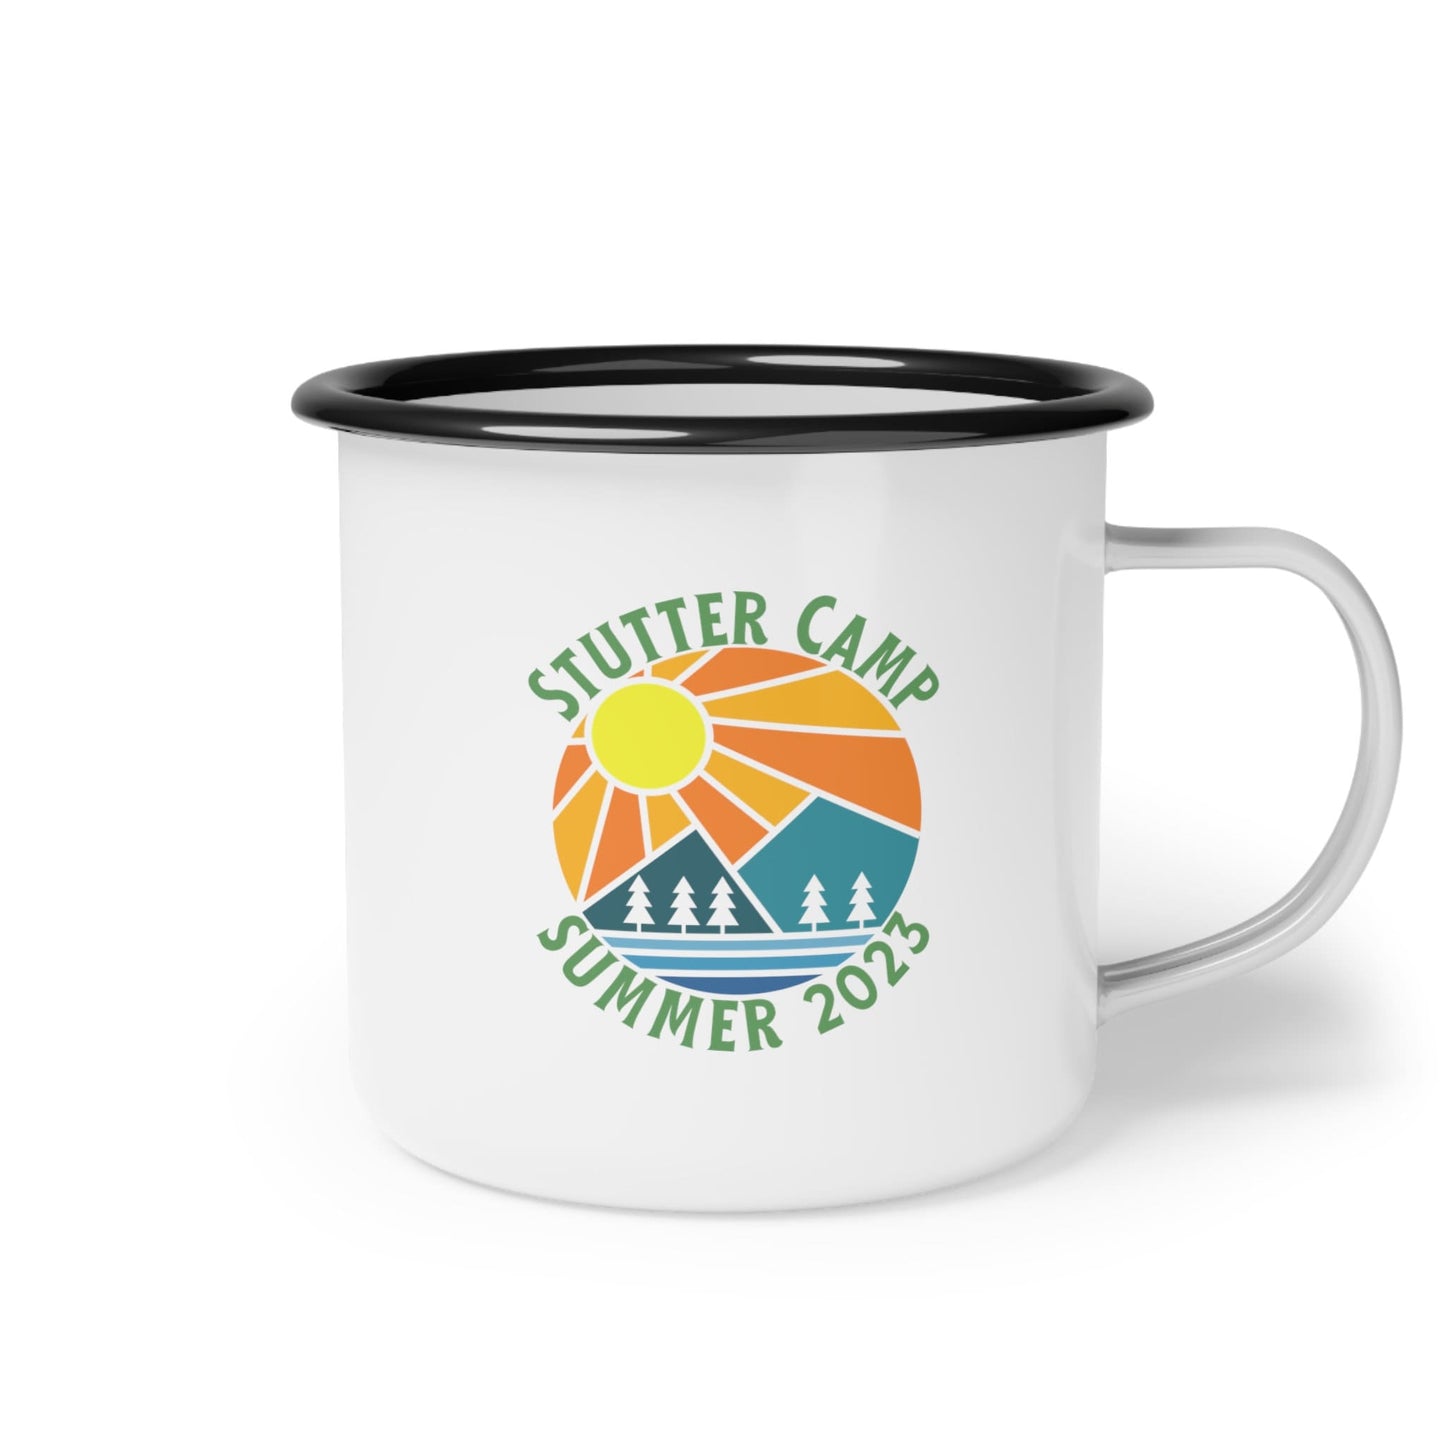 Stutter Camp Summer 2023 Enamel Coffee Mug